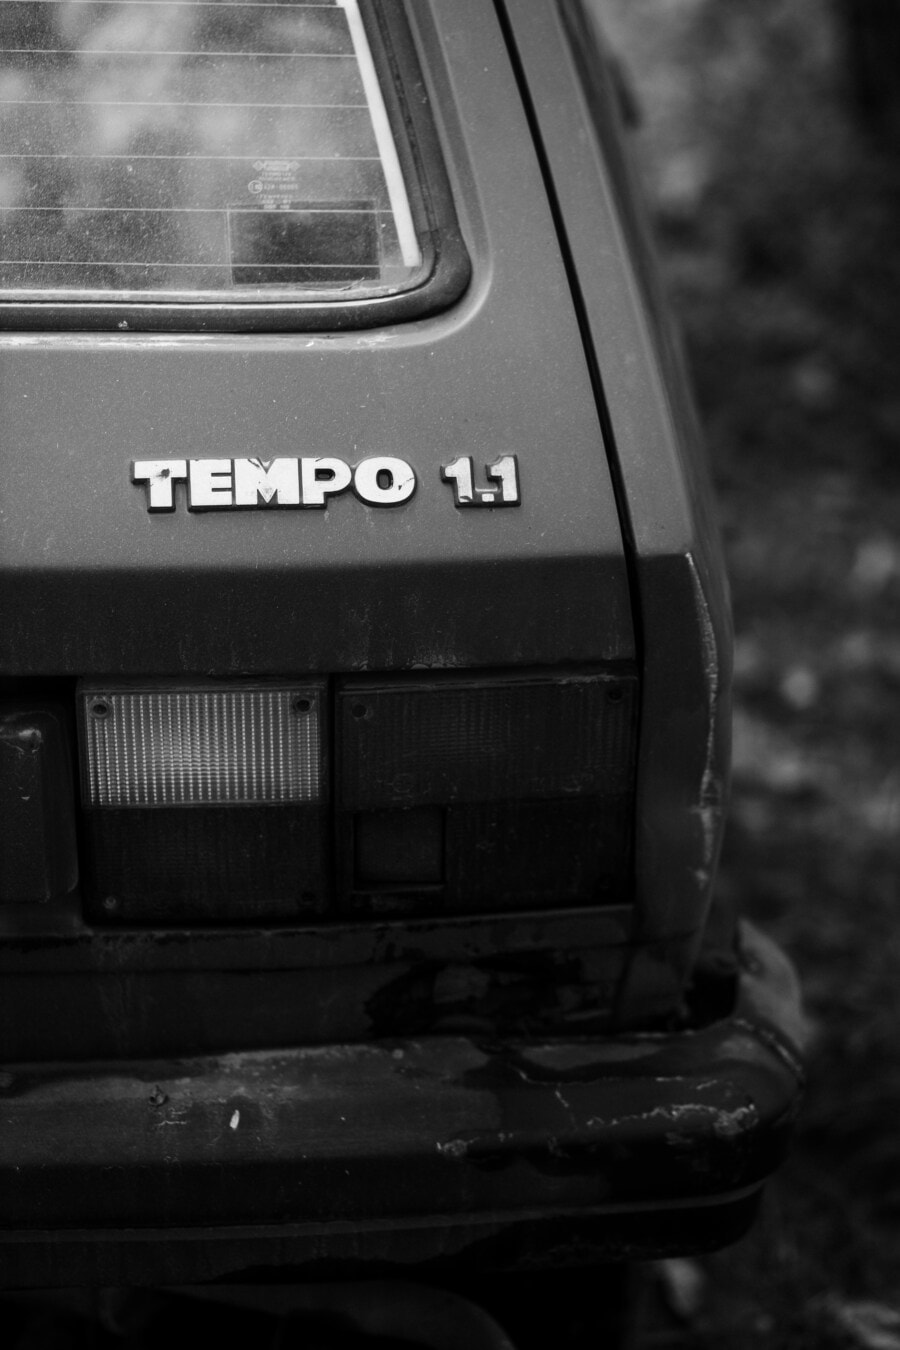 Zastava Yugo Tempo 1.1, รถ, เก่า, ยูโกสลาเวีย, กันชน, ขาวดำ, ย้อนยุค, ยานพาหนะ, คลาสสิก, ถูกทอดทิ้ง, สีดำและสีขาว